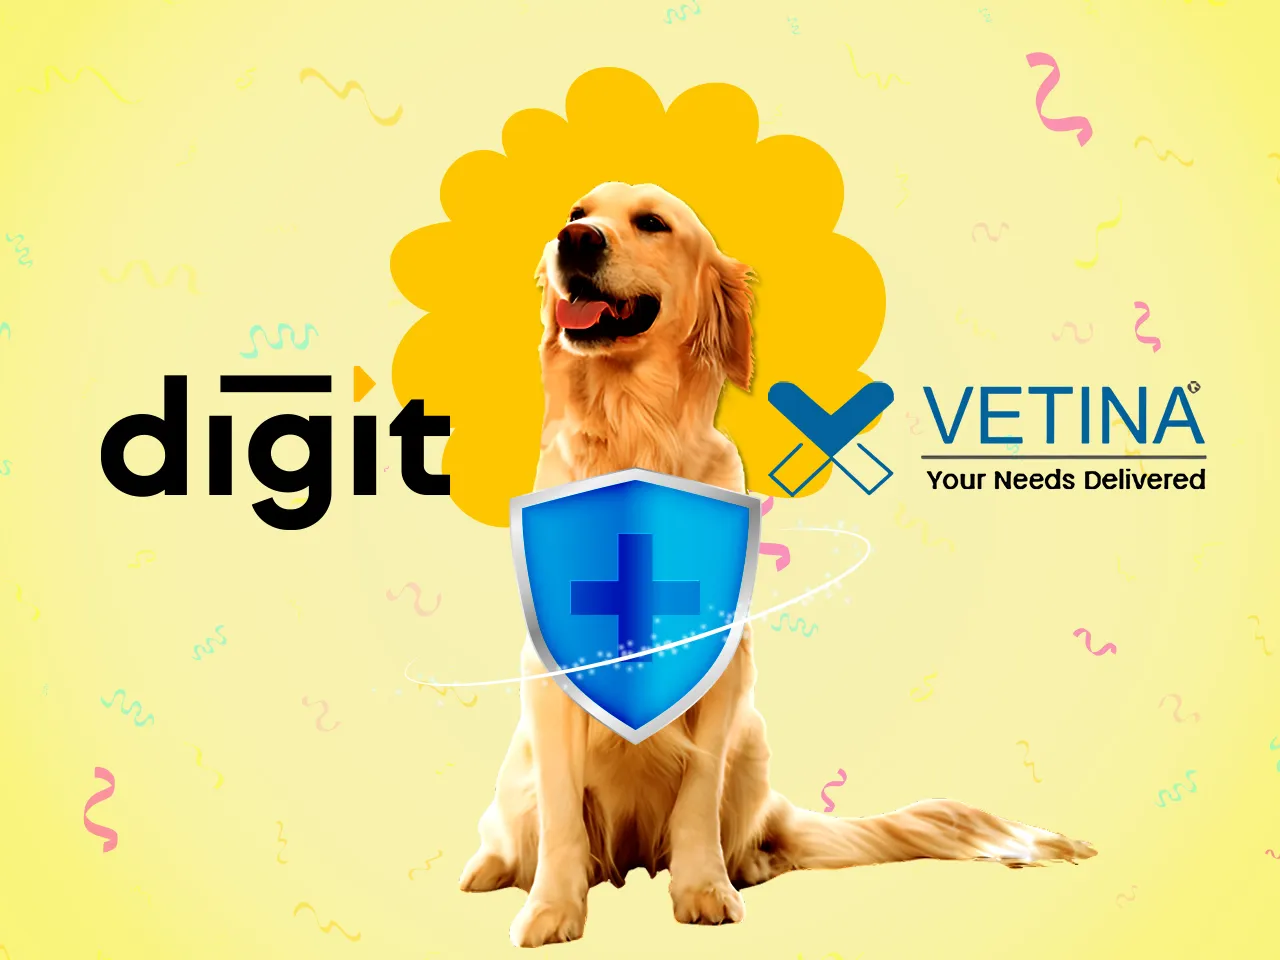  Digit pet insurance and Vetina Healthcare.jpg